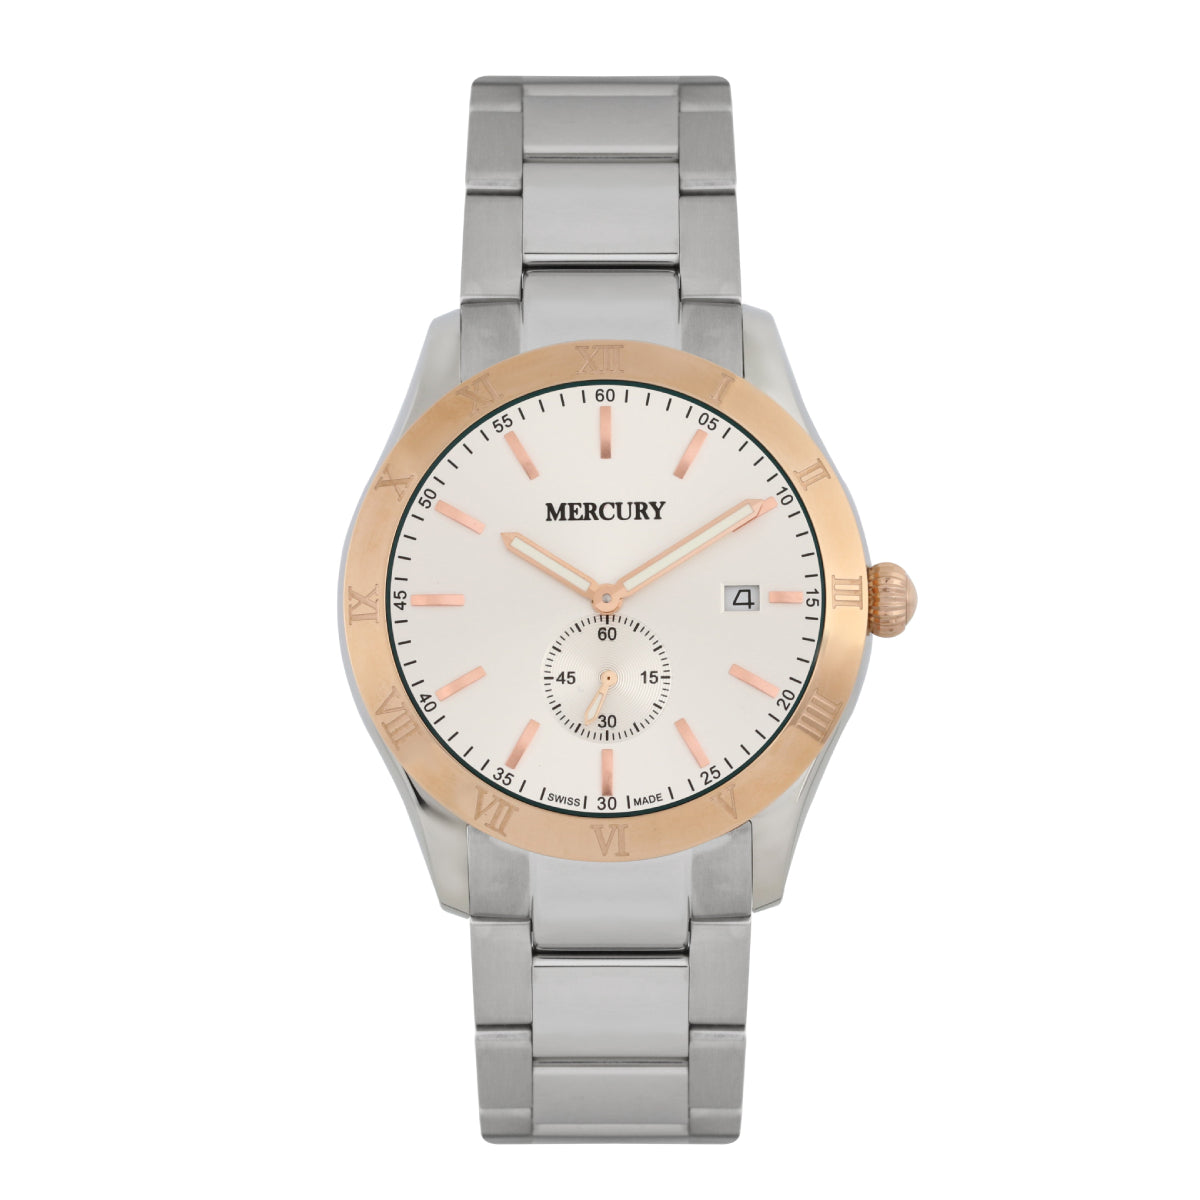 Mercury Men's Swiss Quartz Watch, White Dial - MER-0052